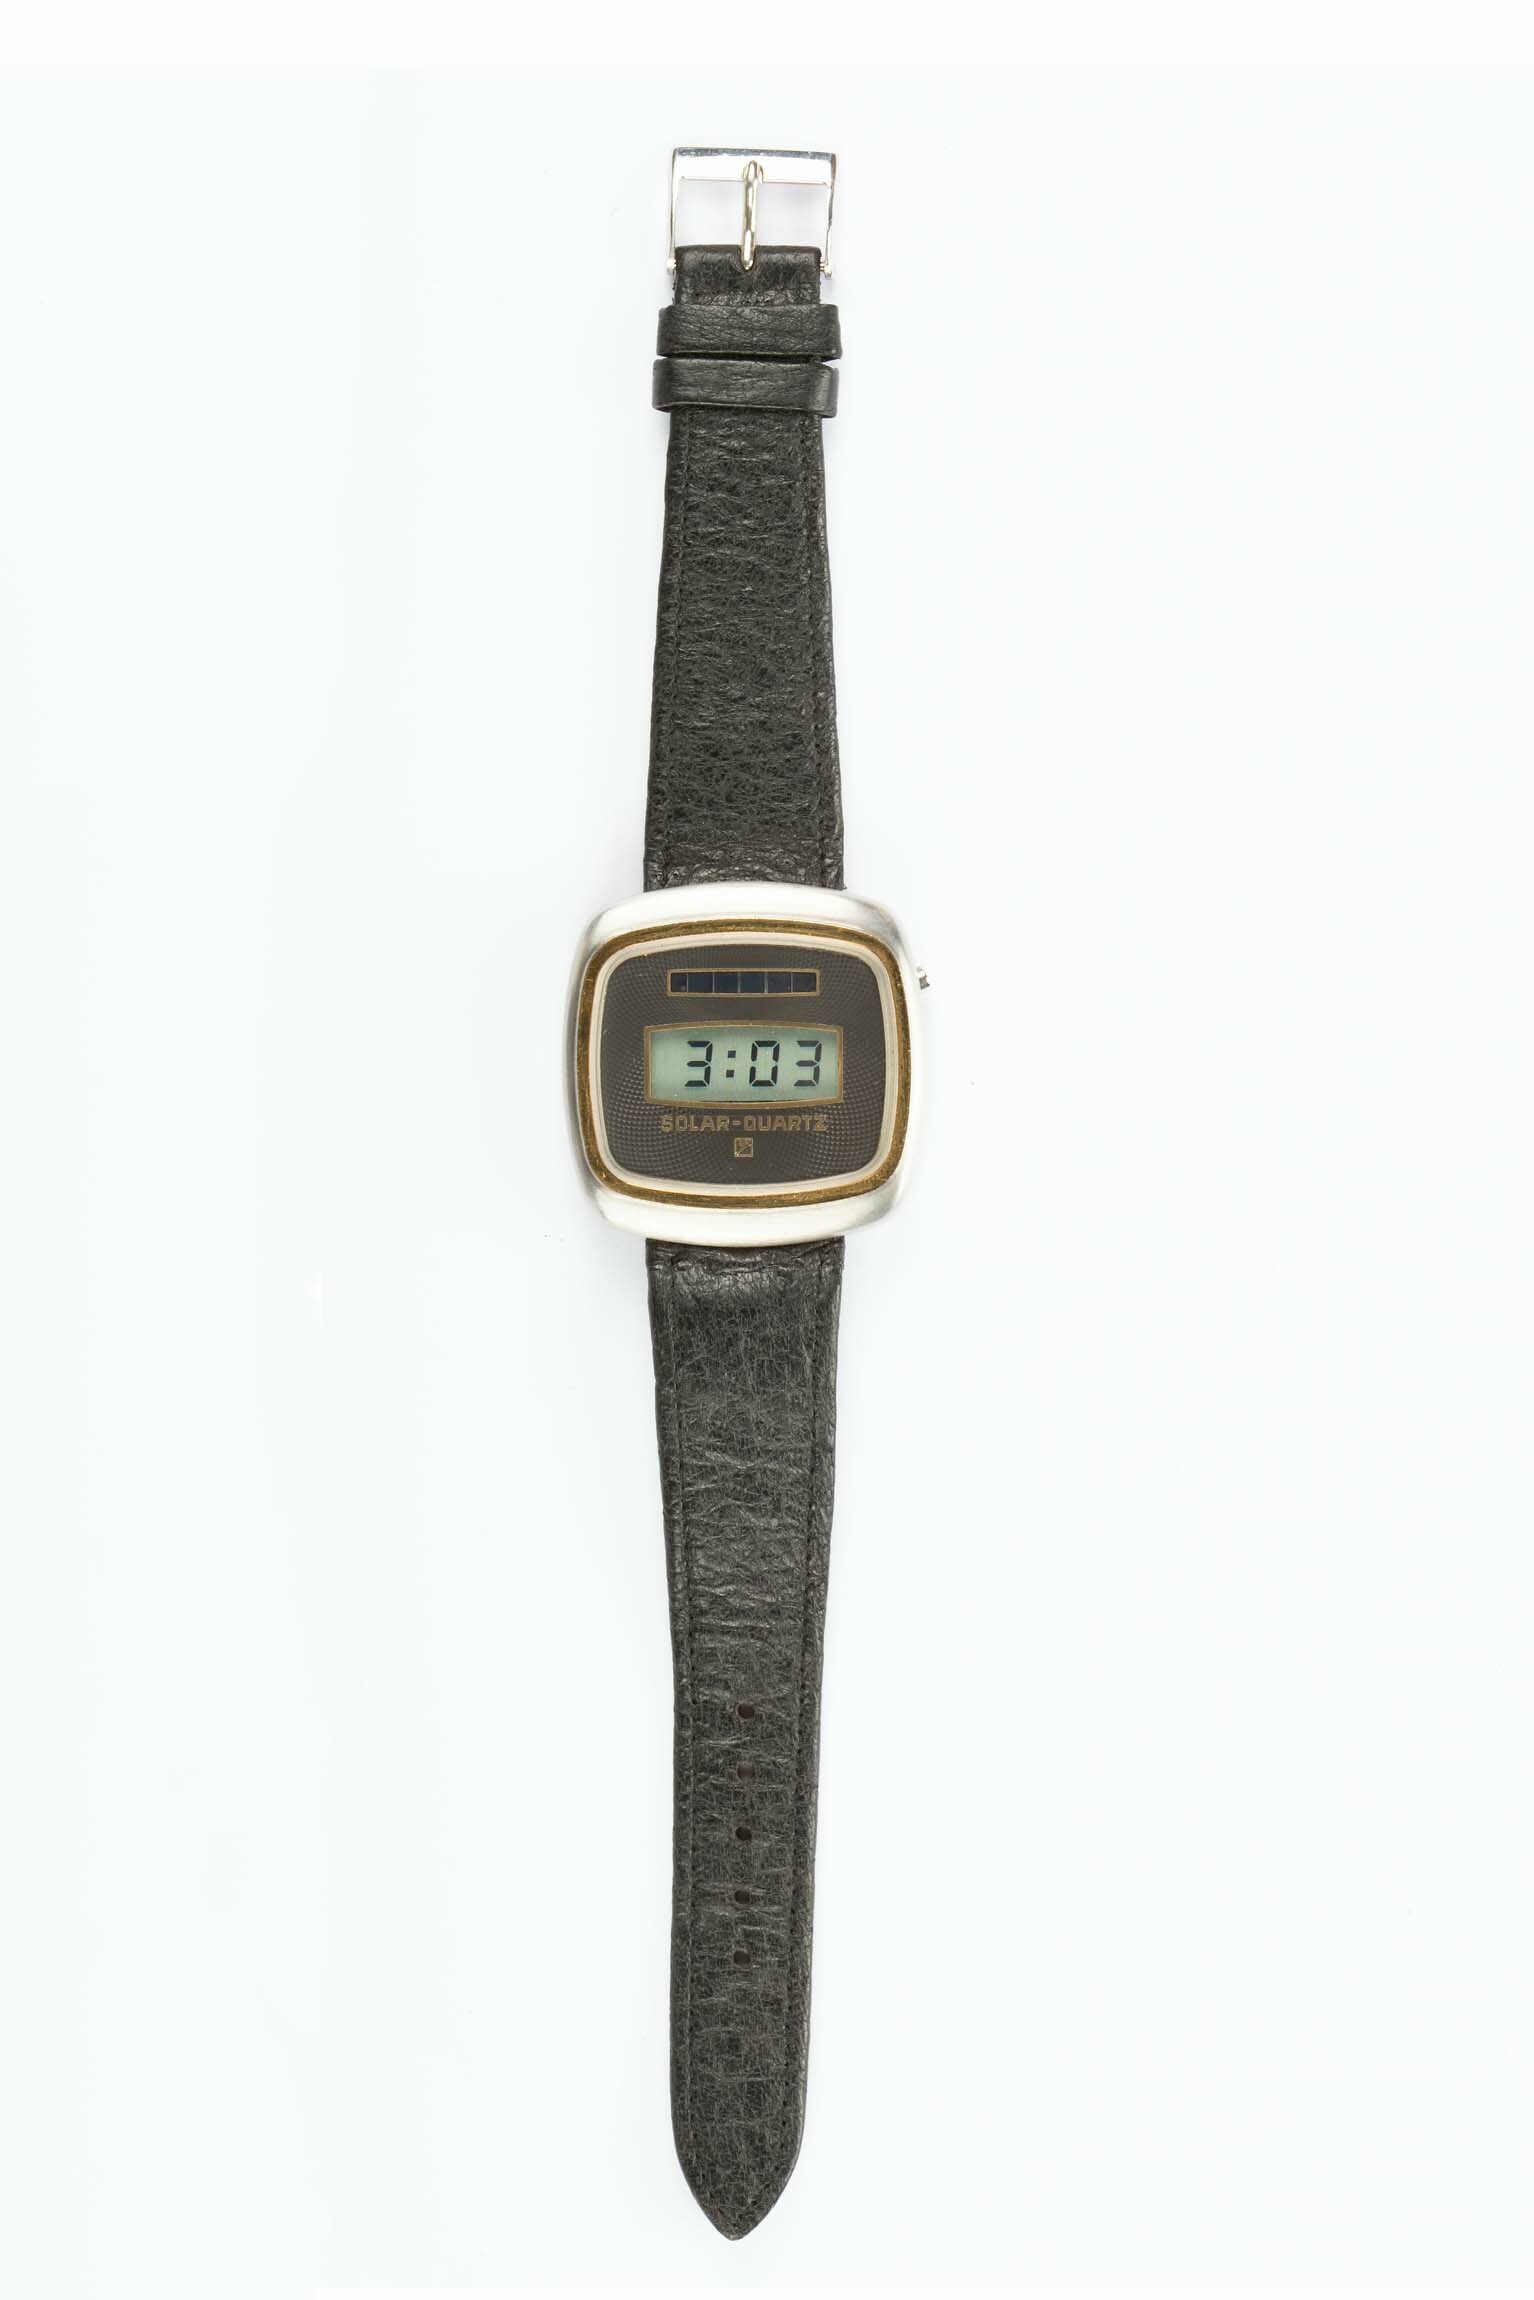 Armbanduhr "Solar Quartz", Cristalonic, München, 1976 (Deutsches Uhrenmuseum CC BY-SA)